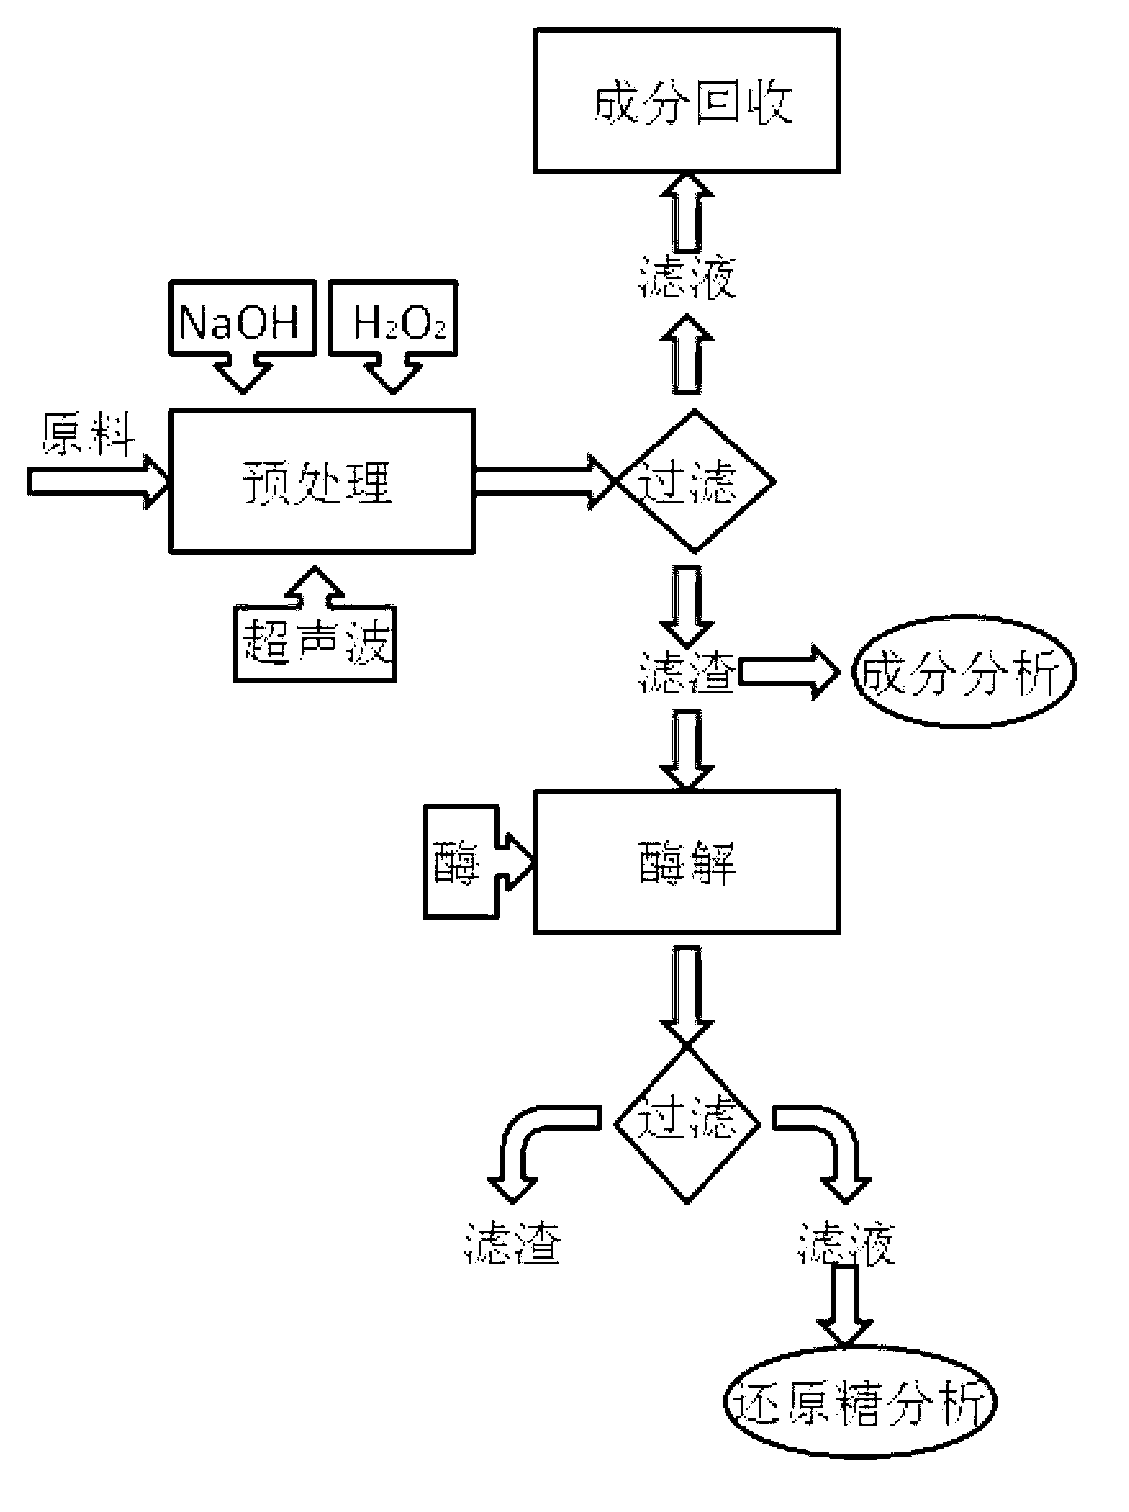 Method for enhancing alkaline hydrogen peroxide to pretreat lignocellulose by ultrasonic wave